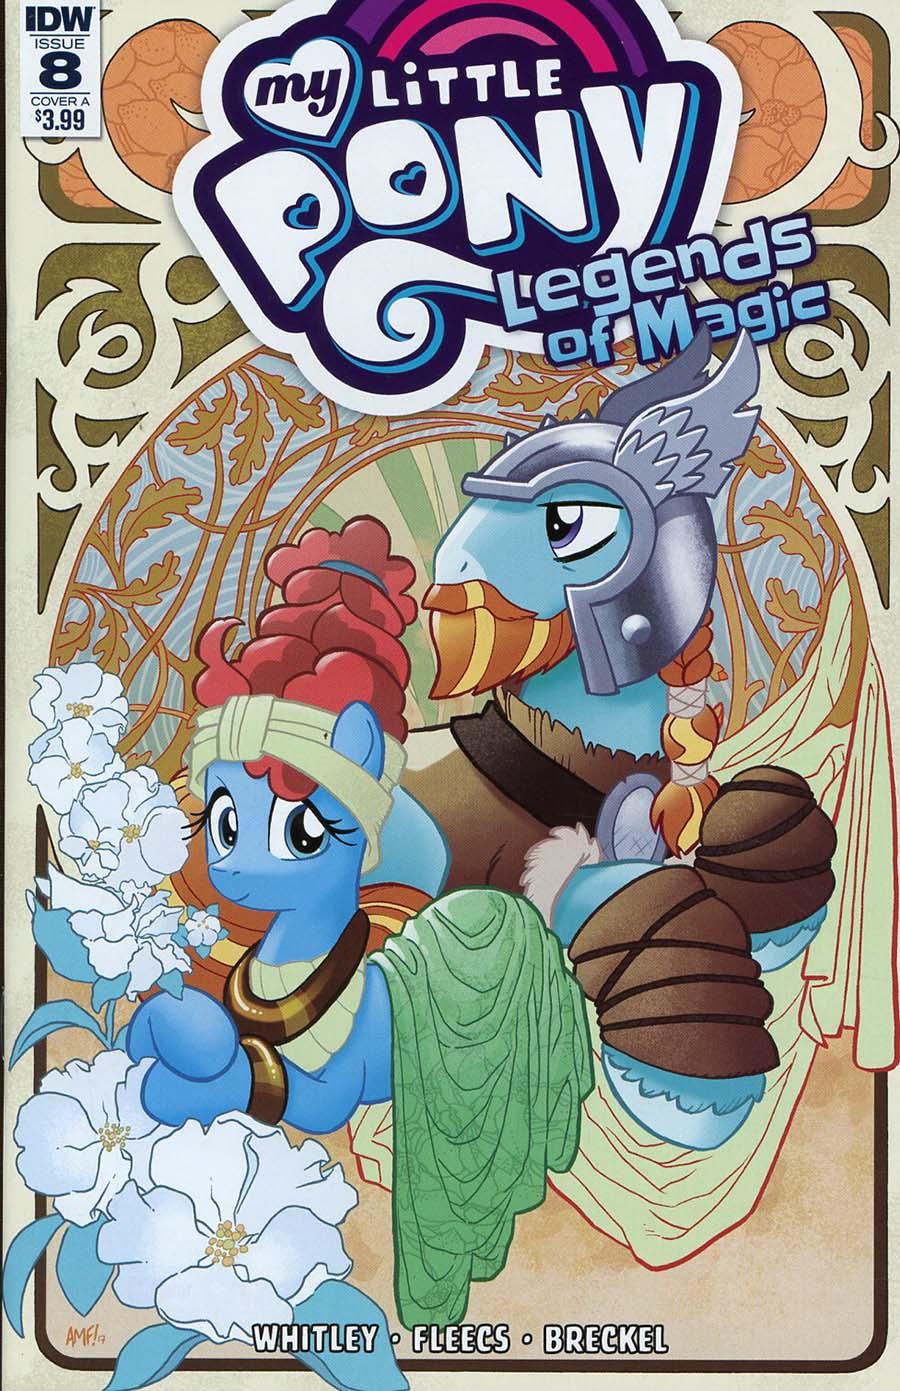 My Little Pony Legends Of Magic Vol. 1 #8